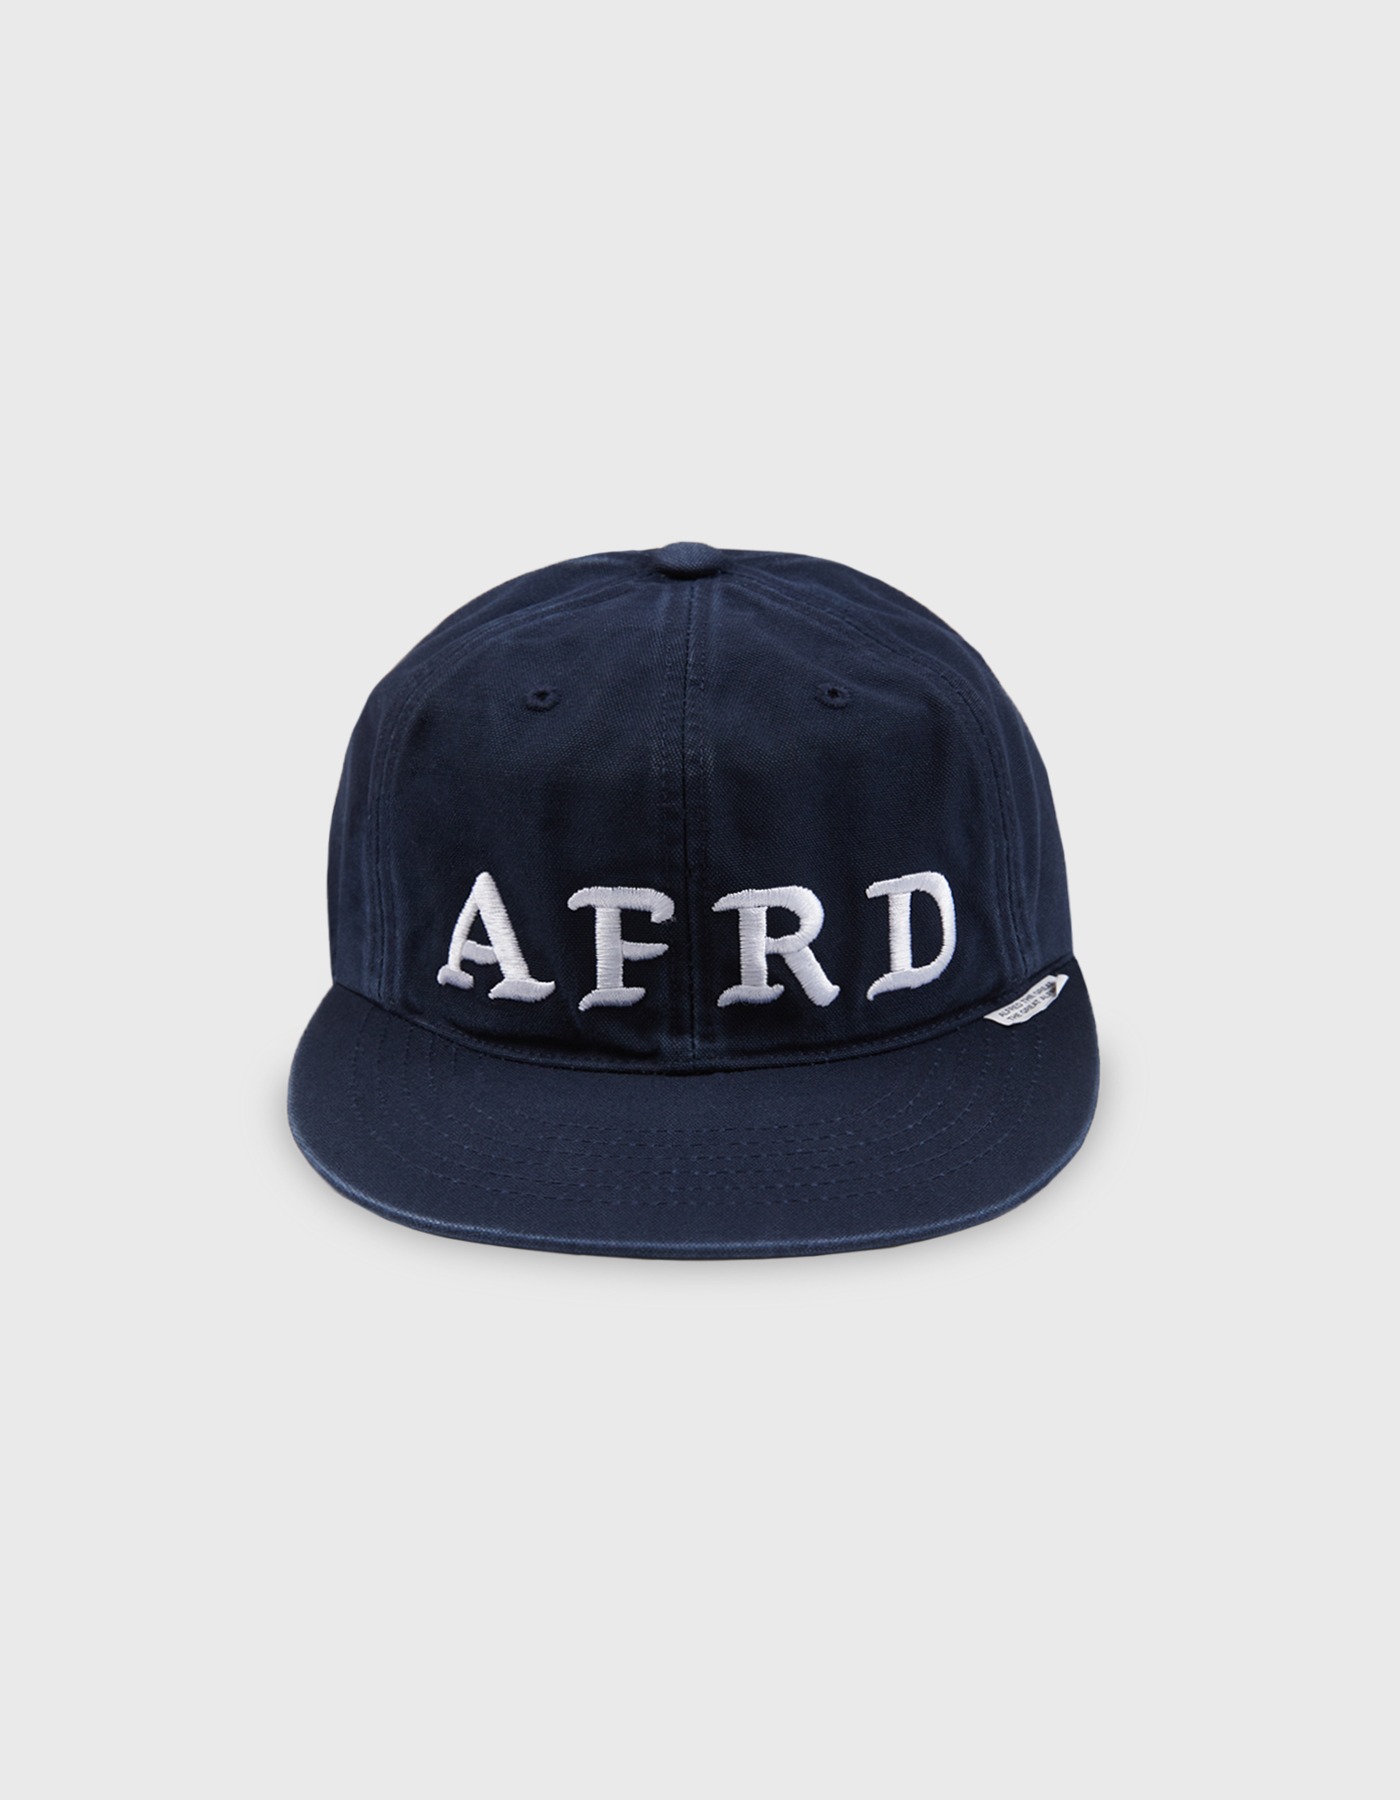 AFRD CAP / Dark Navy